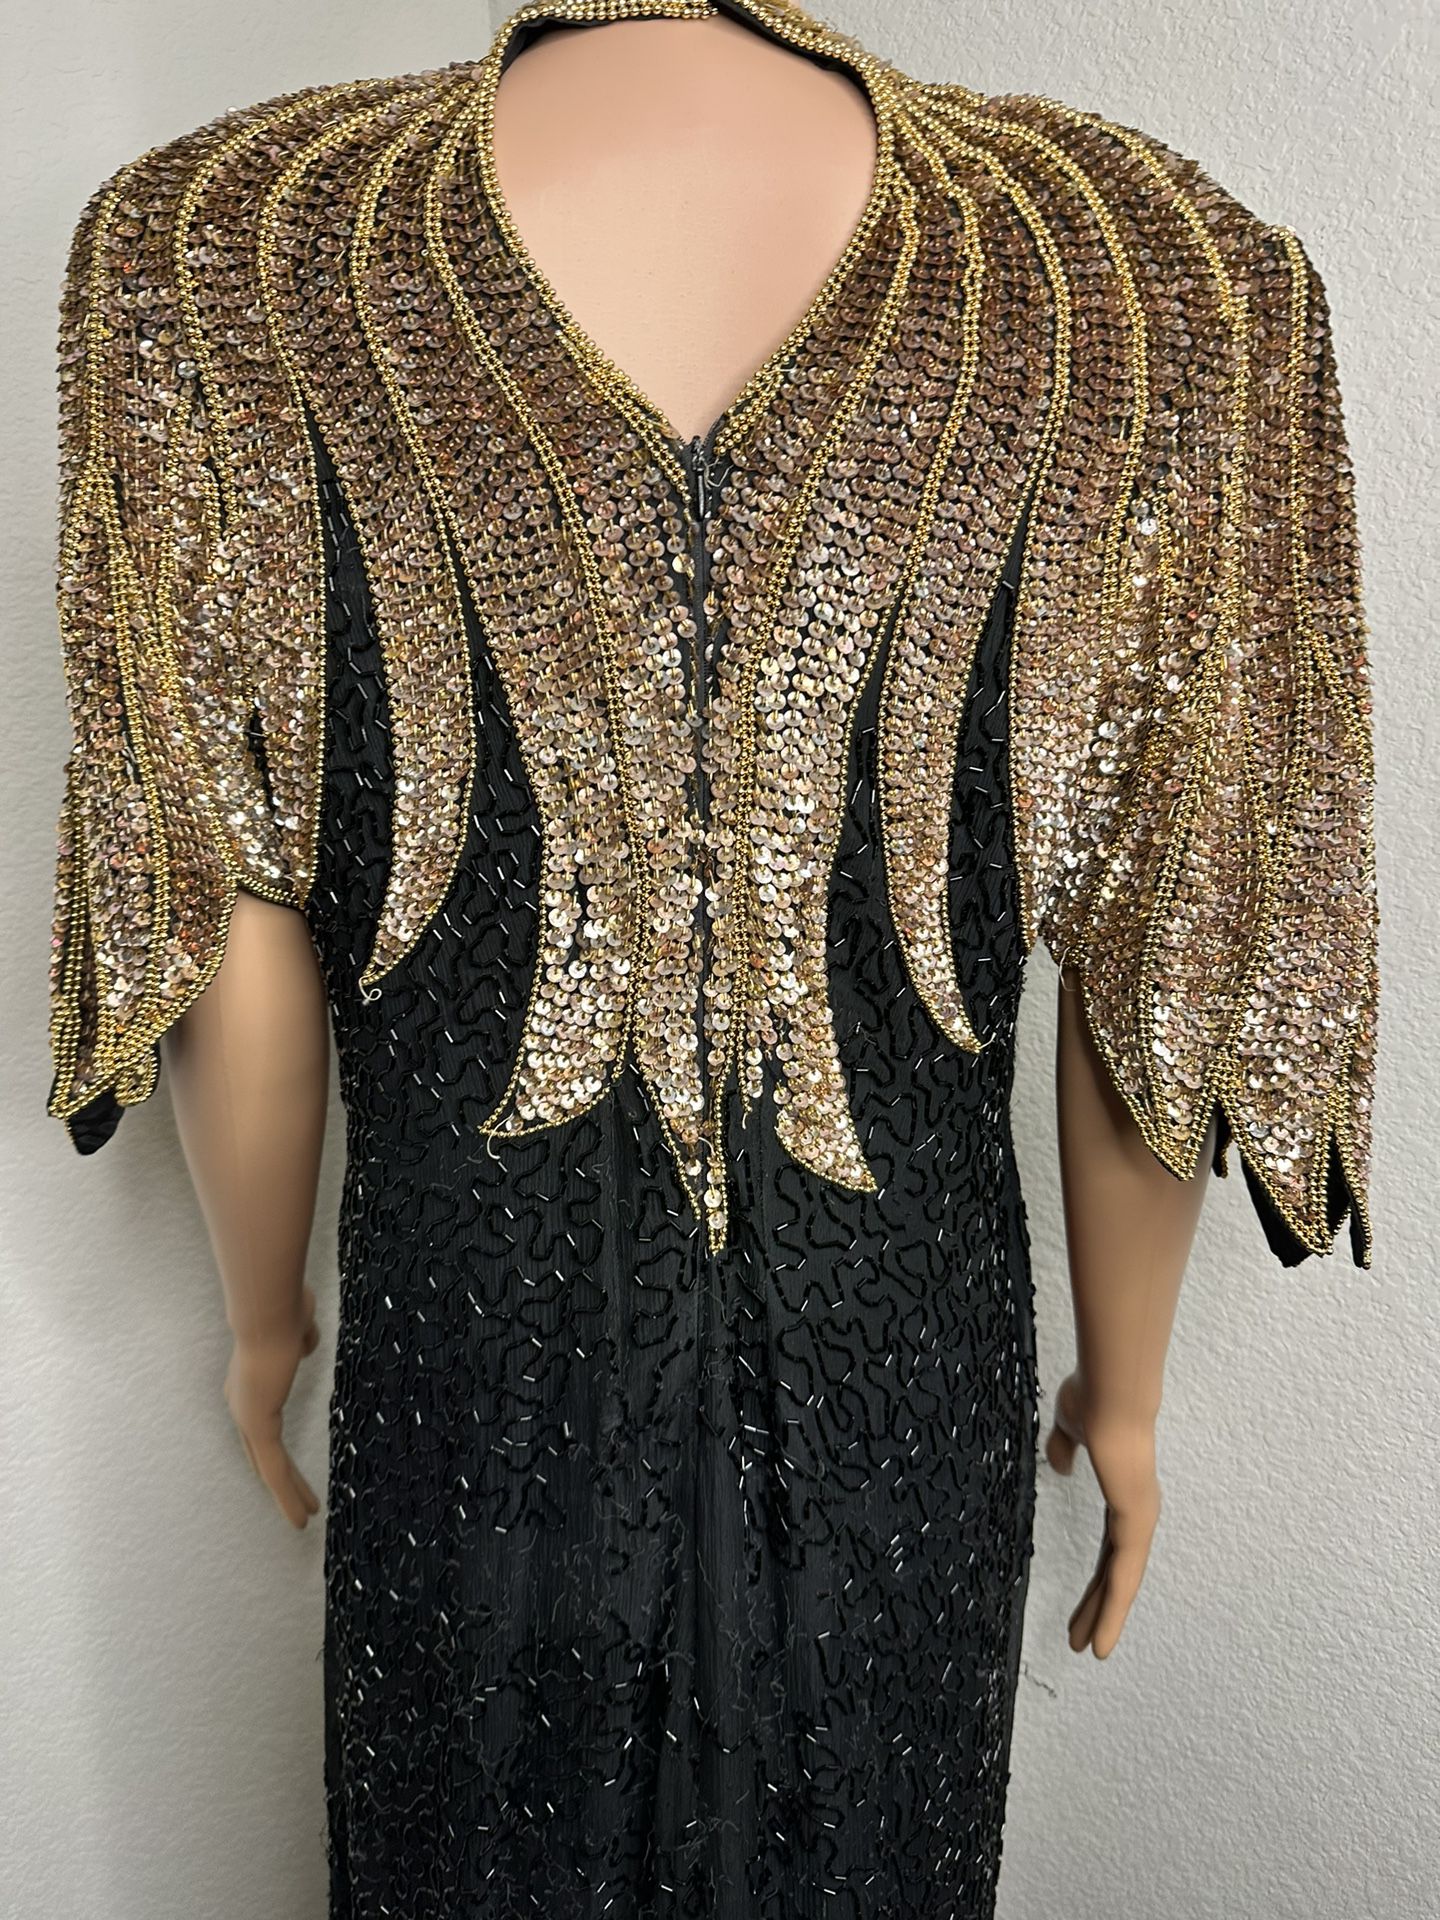 Vintage Sequin Dress